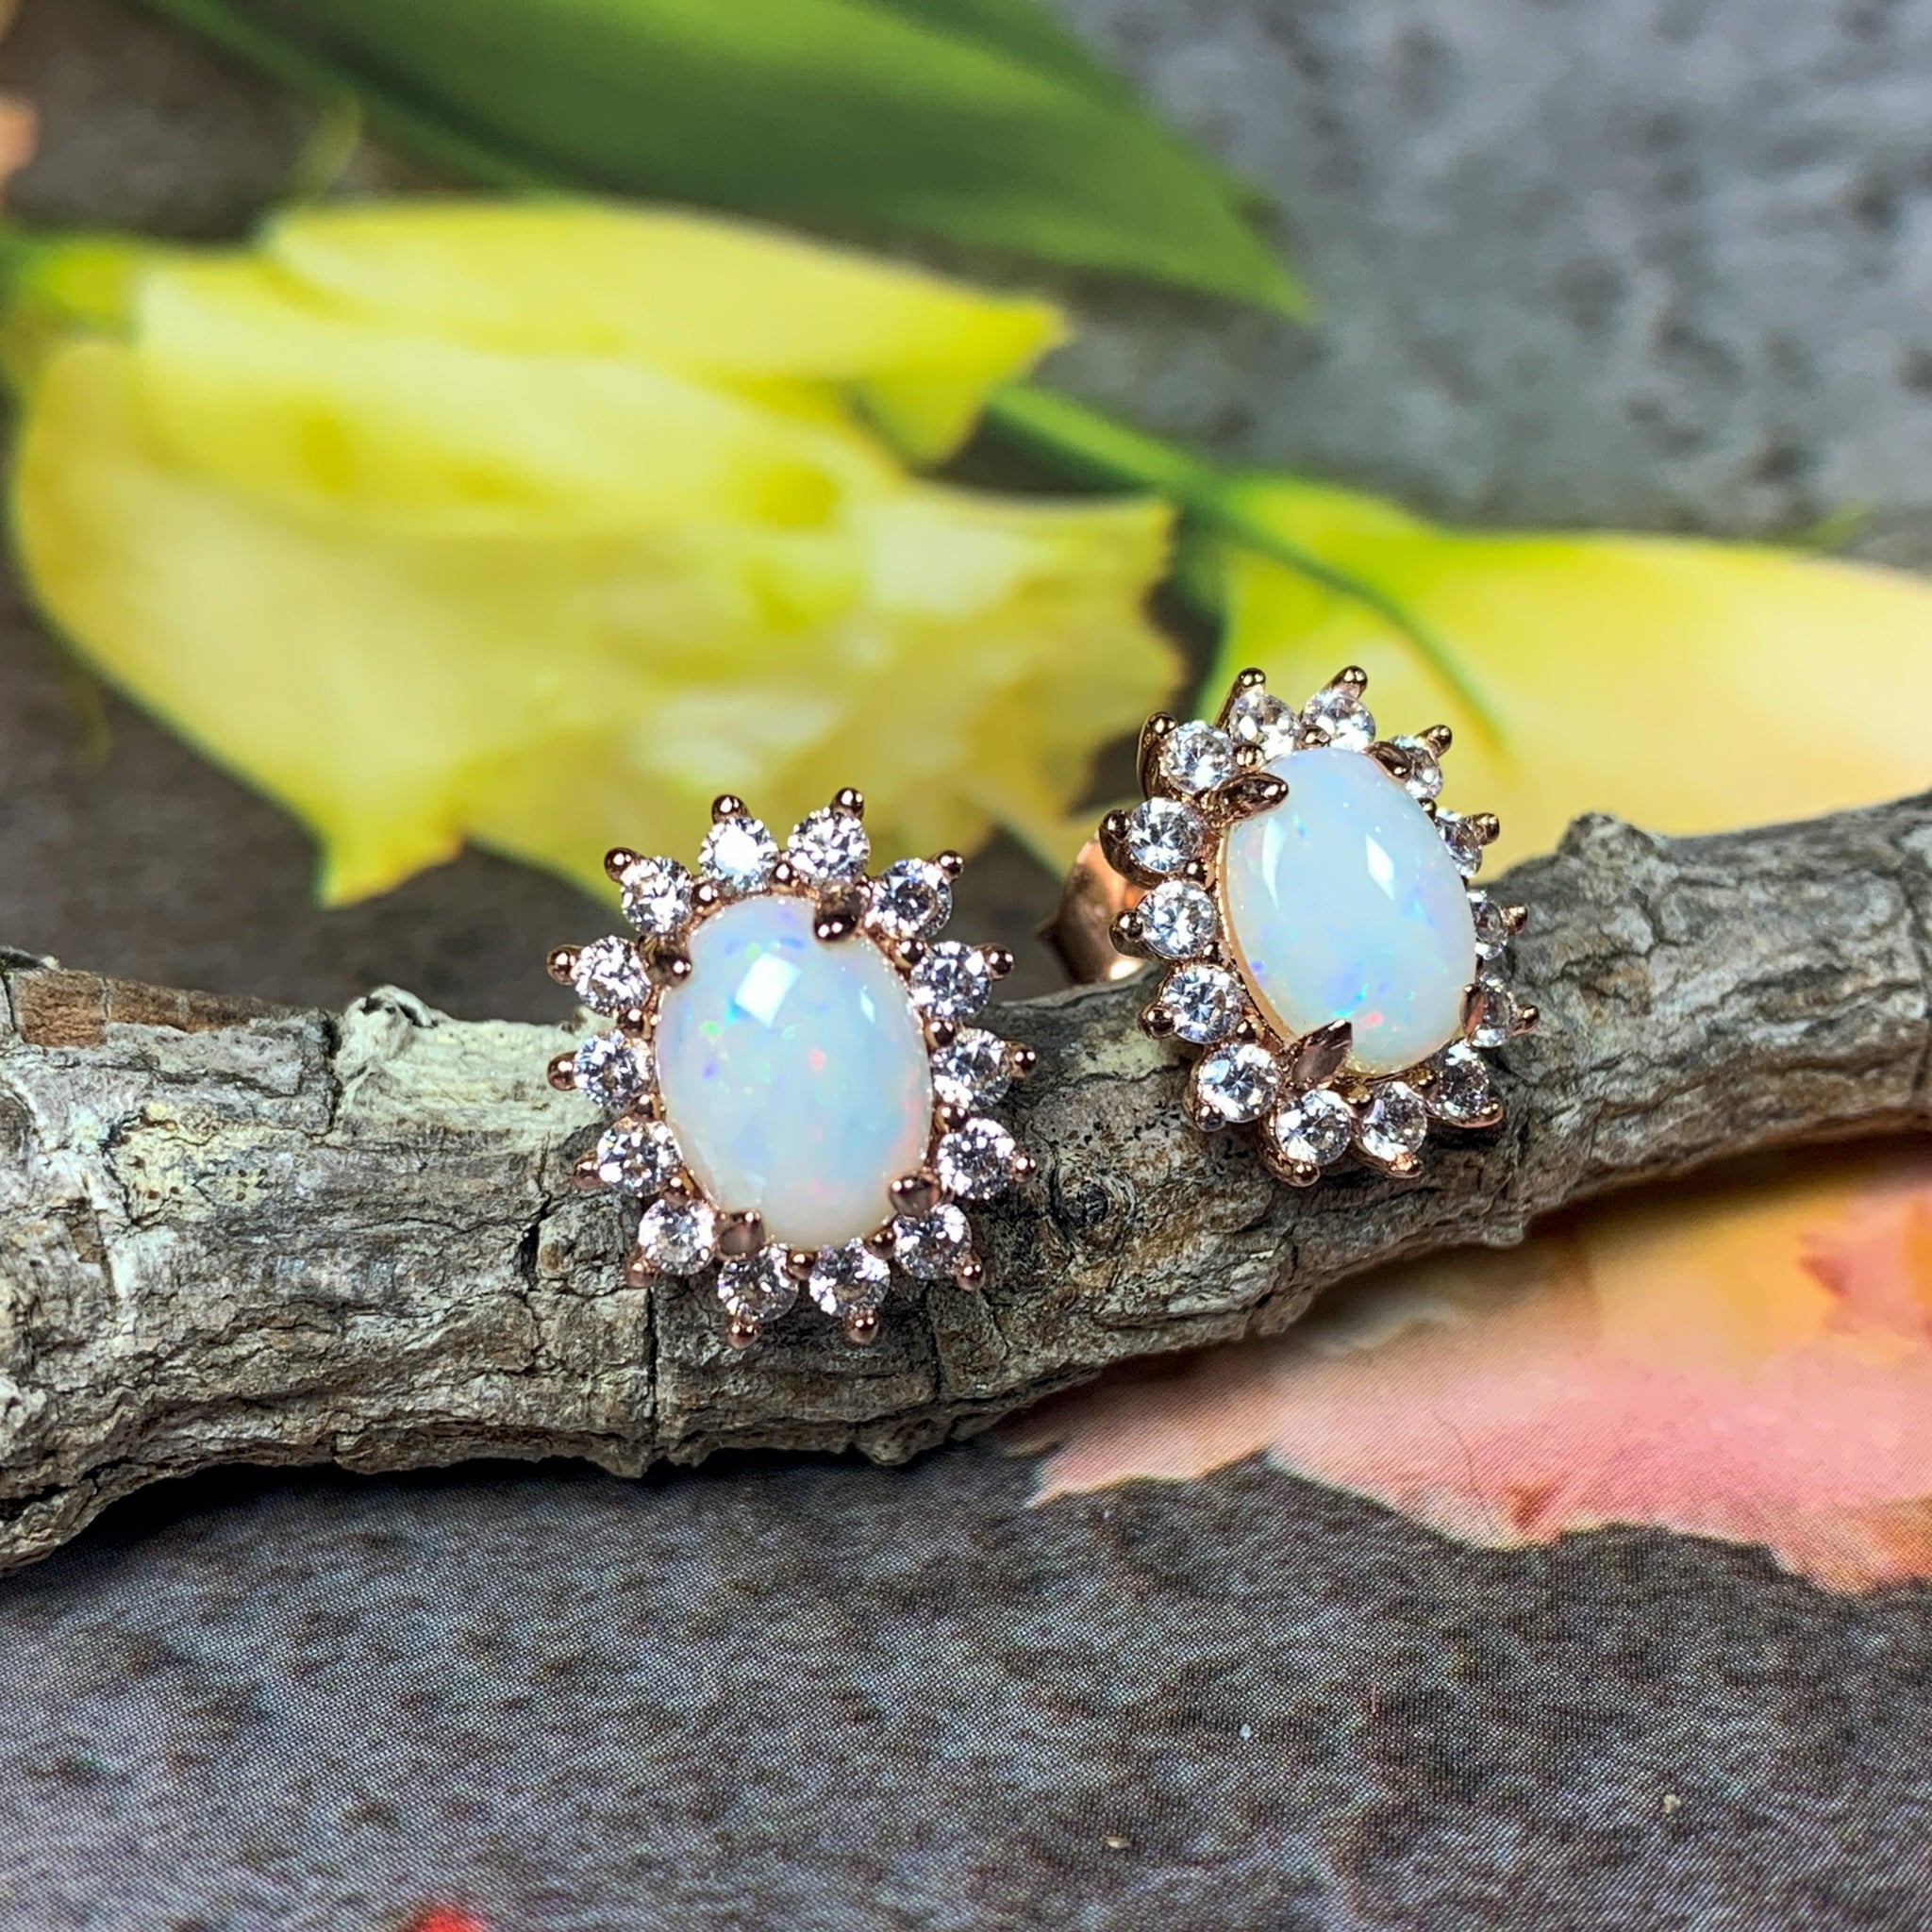 Rose Gold plated White Opal cluster earrings 8x6mm - Masterpiece Jewellery Opal & Gems Sydney Australia | Online Shop